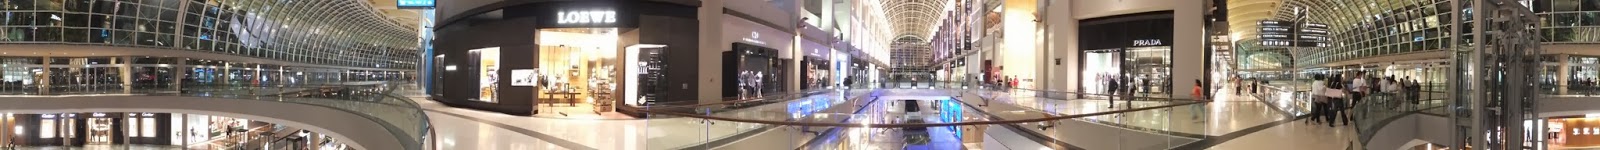 singapore-shopping-mall